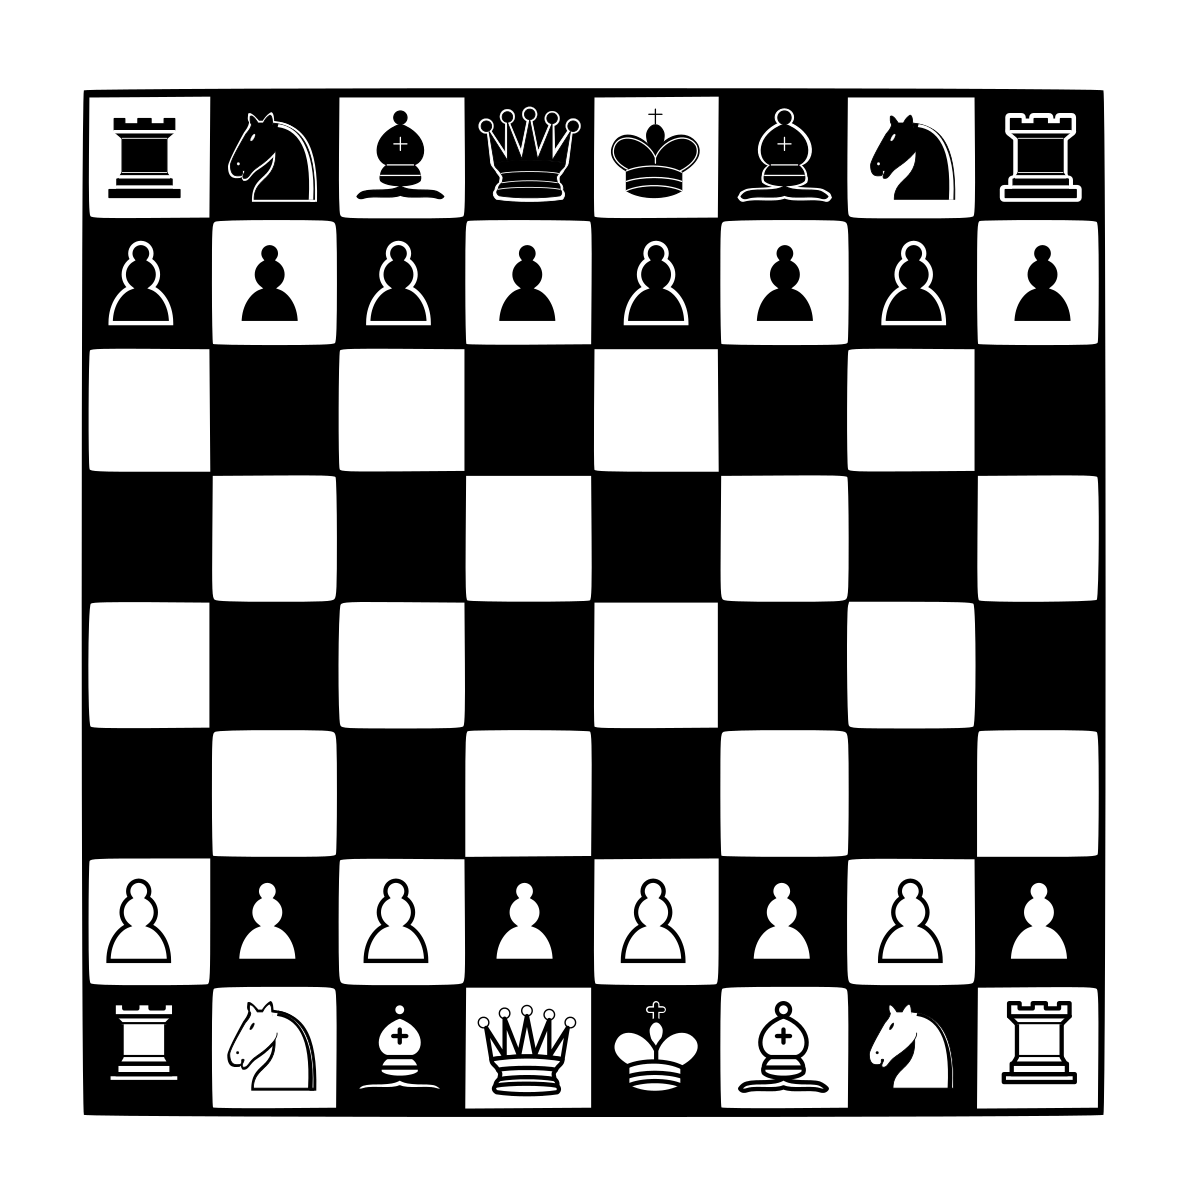 Battle Chess Pieces PNG Photos